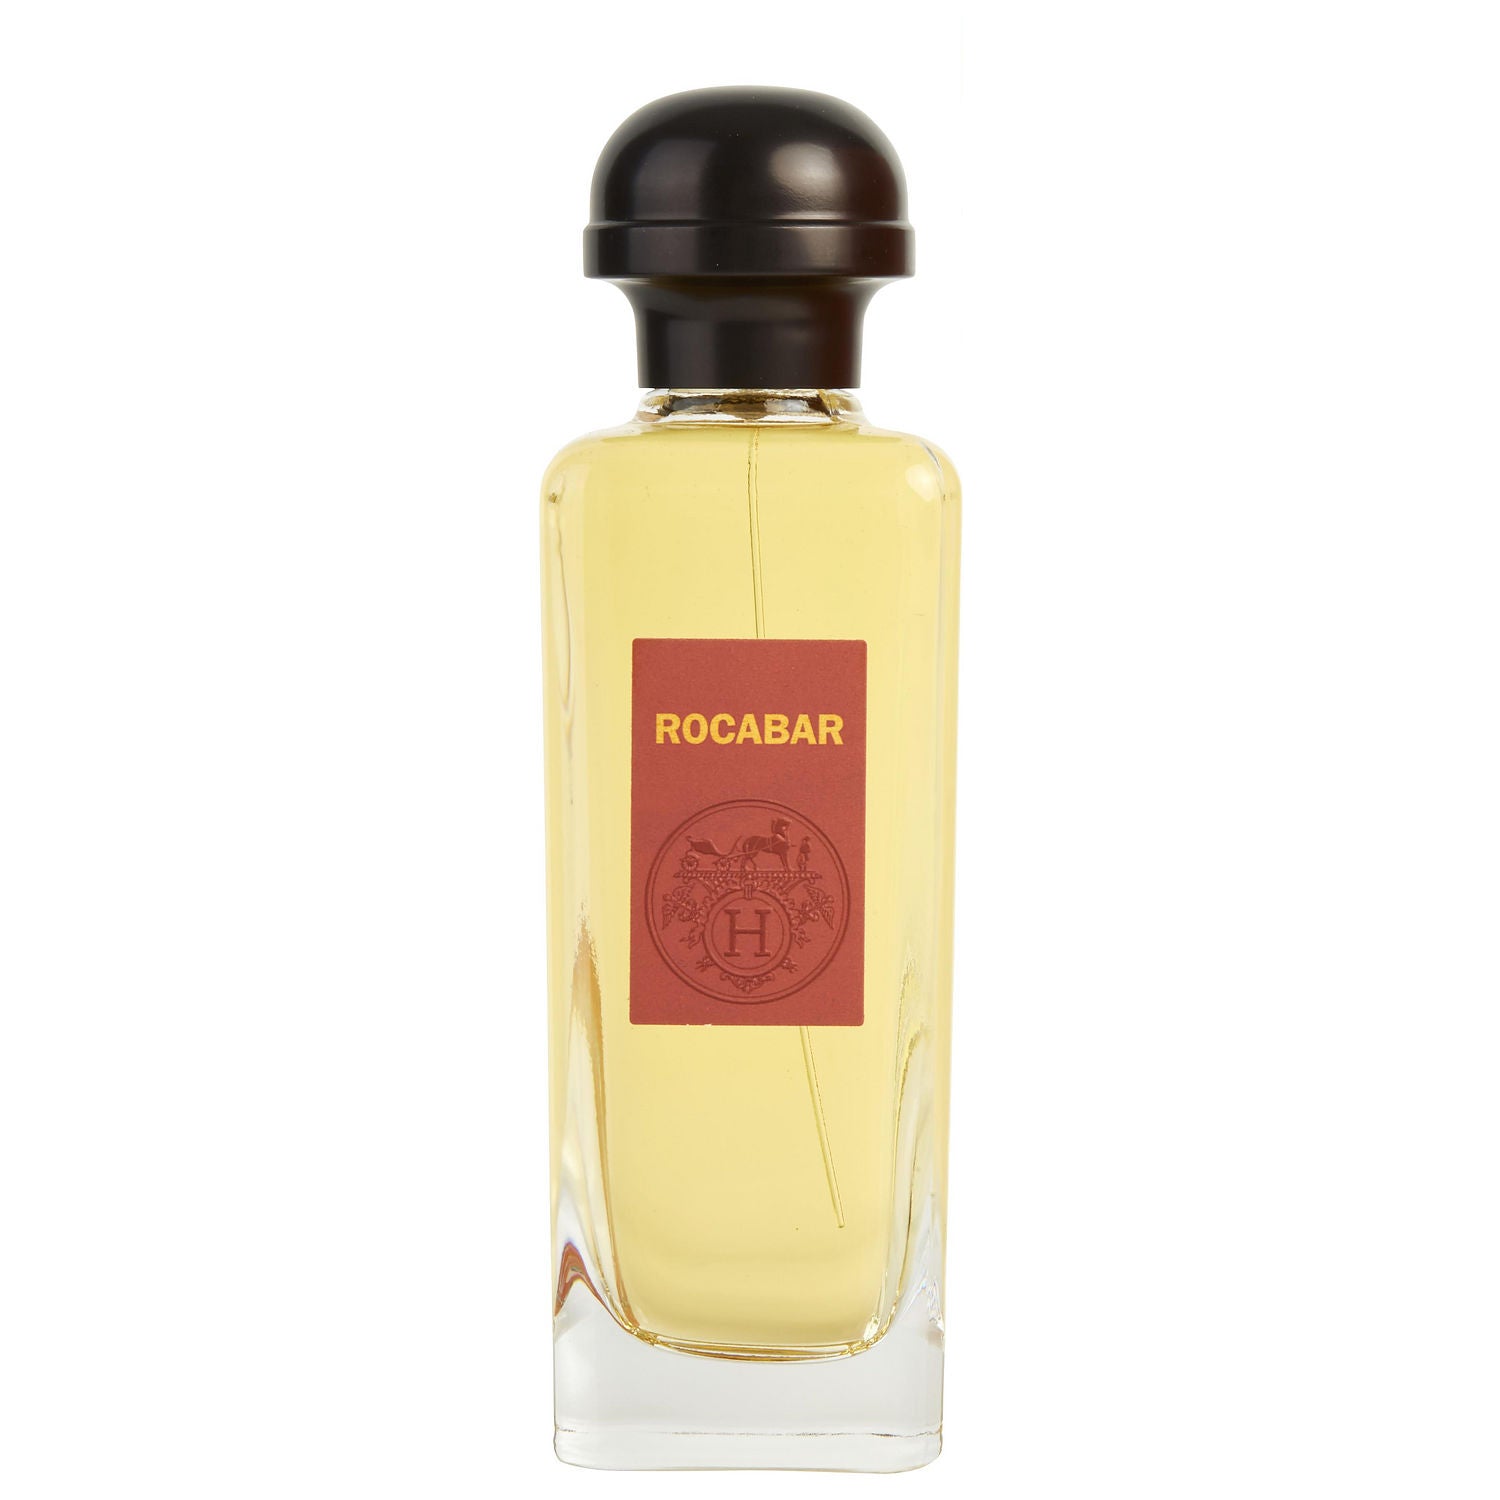 Rocabar by Hermes Fragrance Samples, DecantX